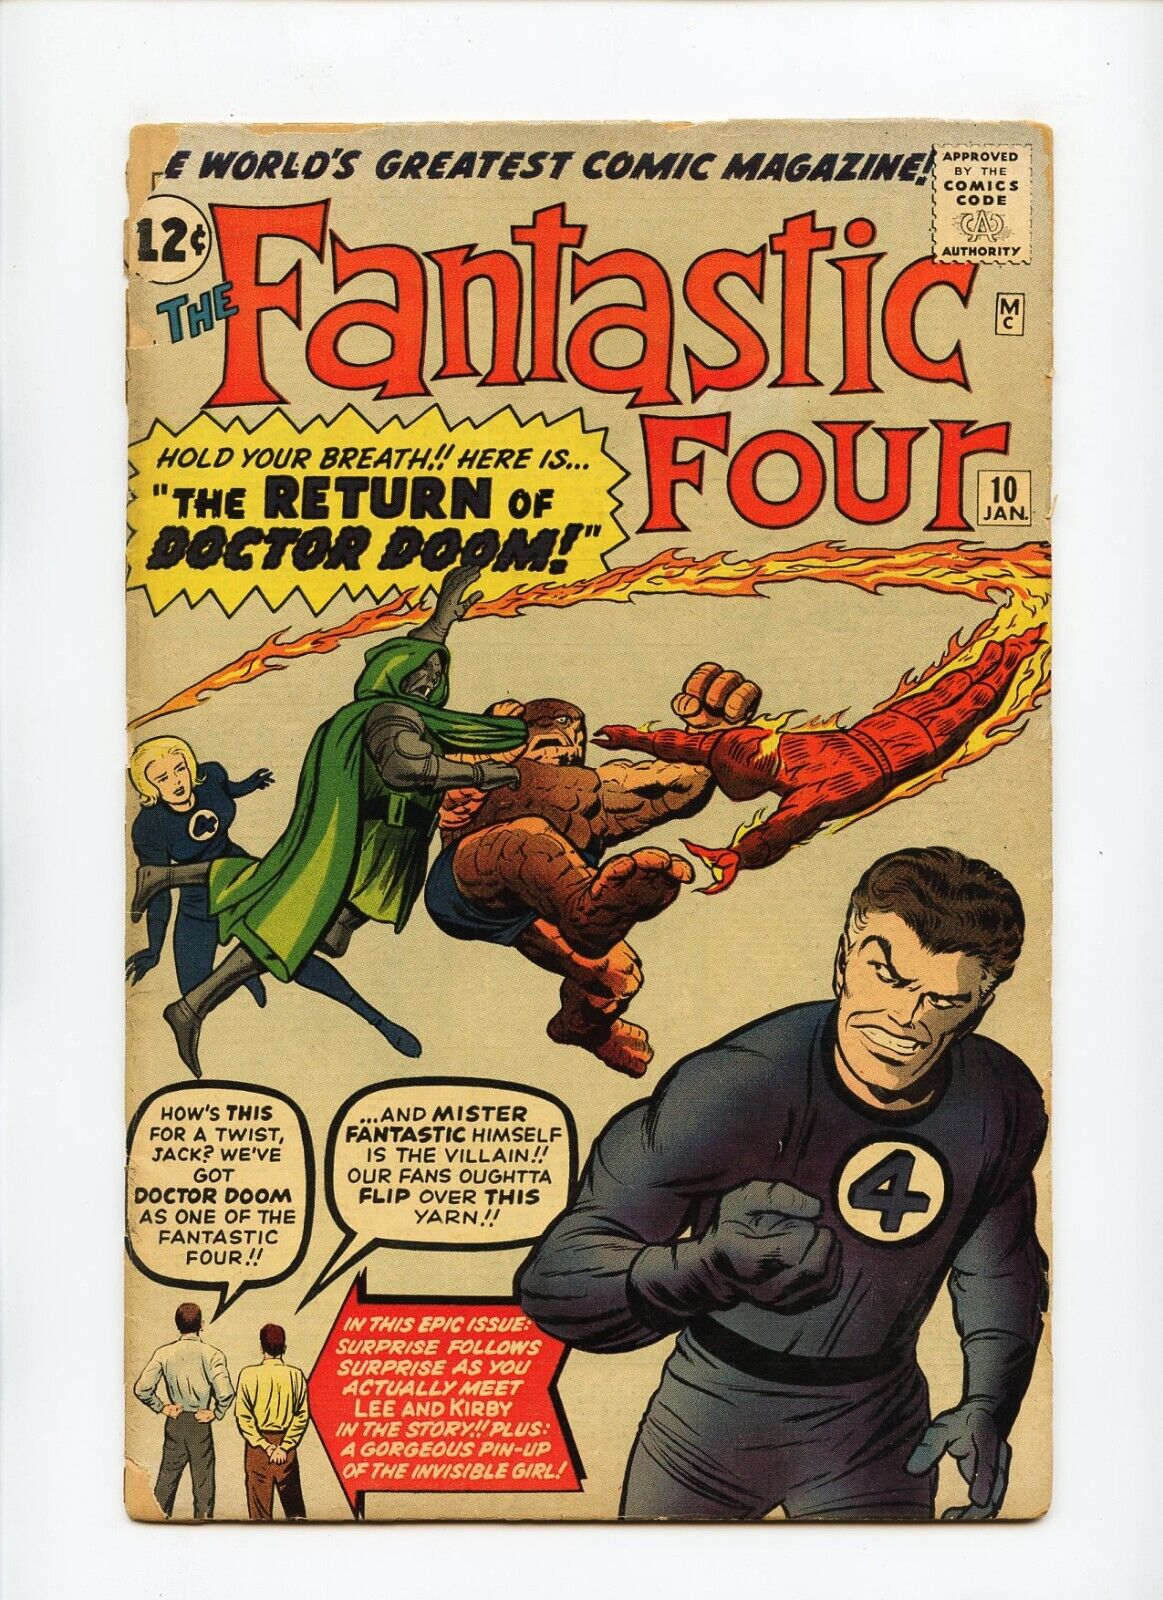 Fantastic Four #10 Marvel Comics Lower Grade